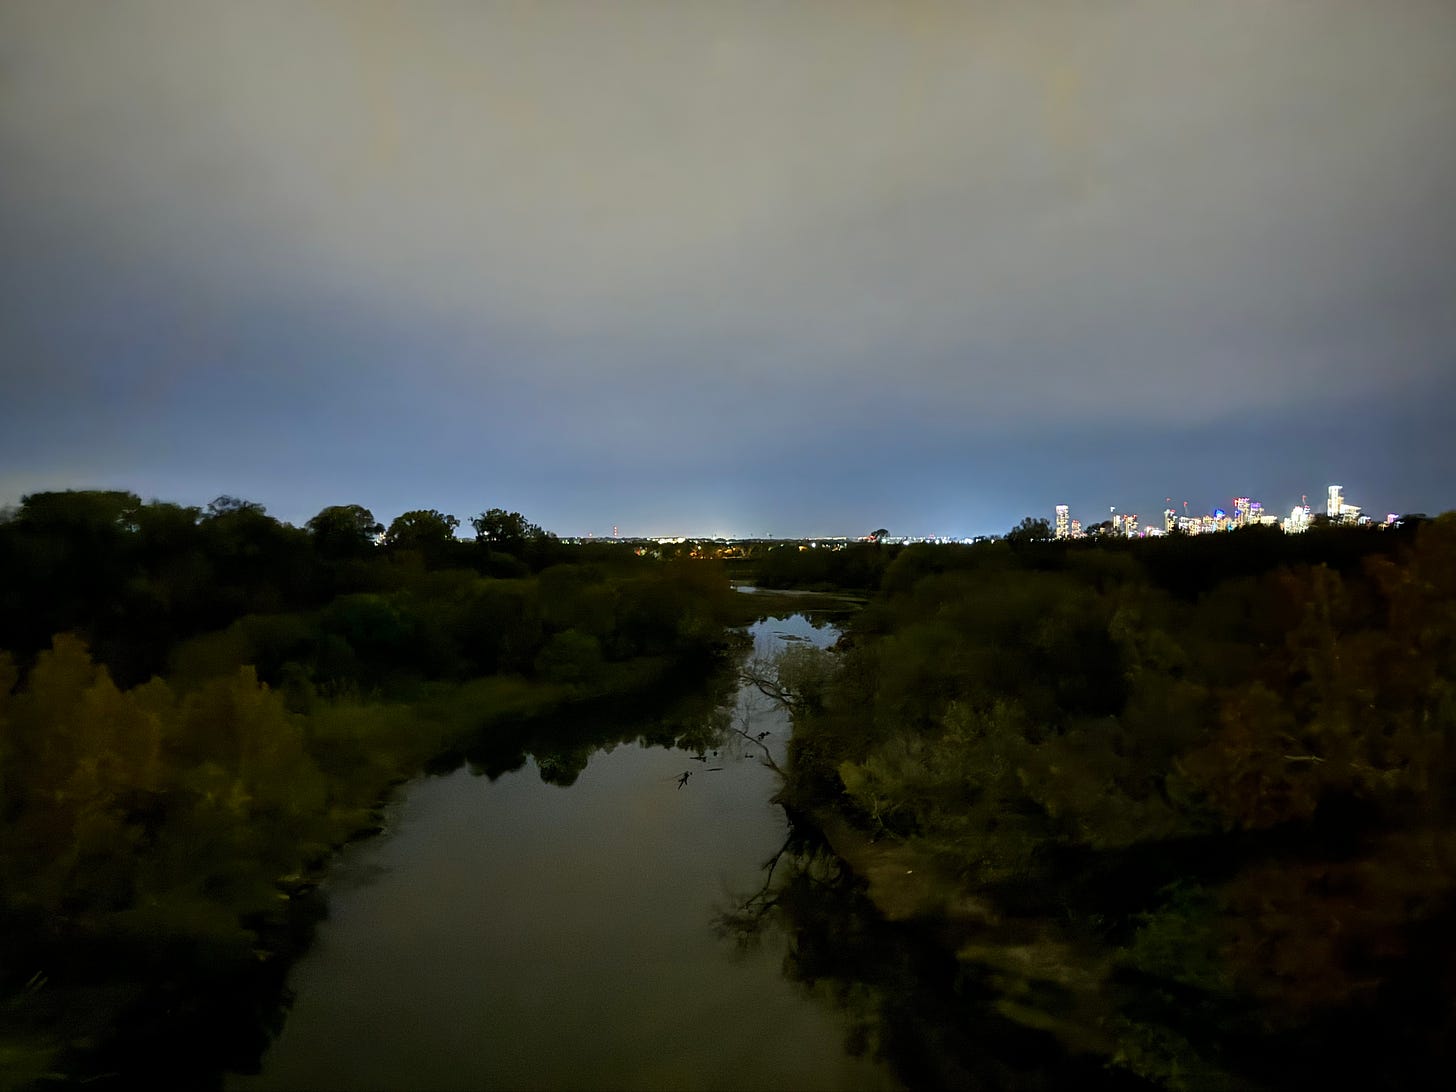 Wild urban river at night, skyscrapers on the horizon